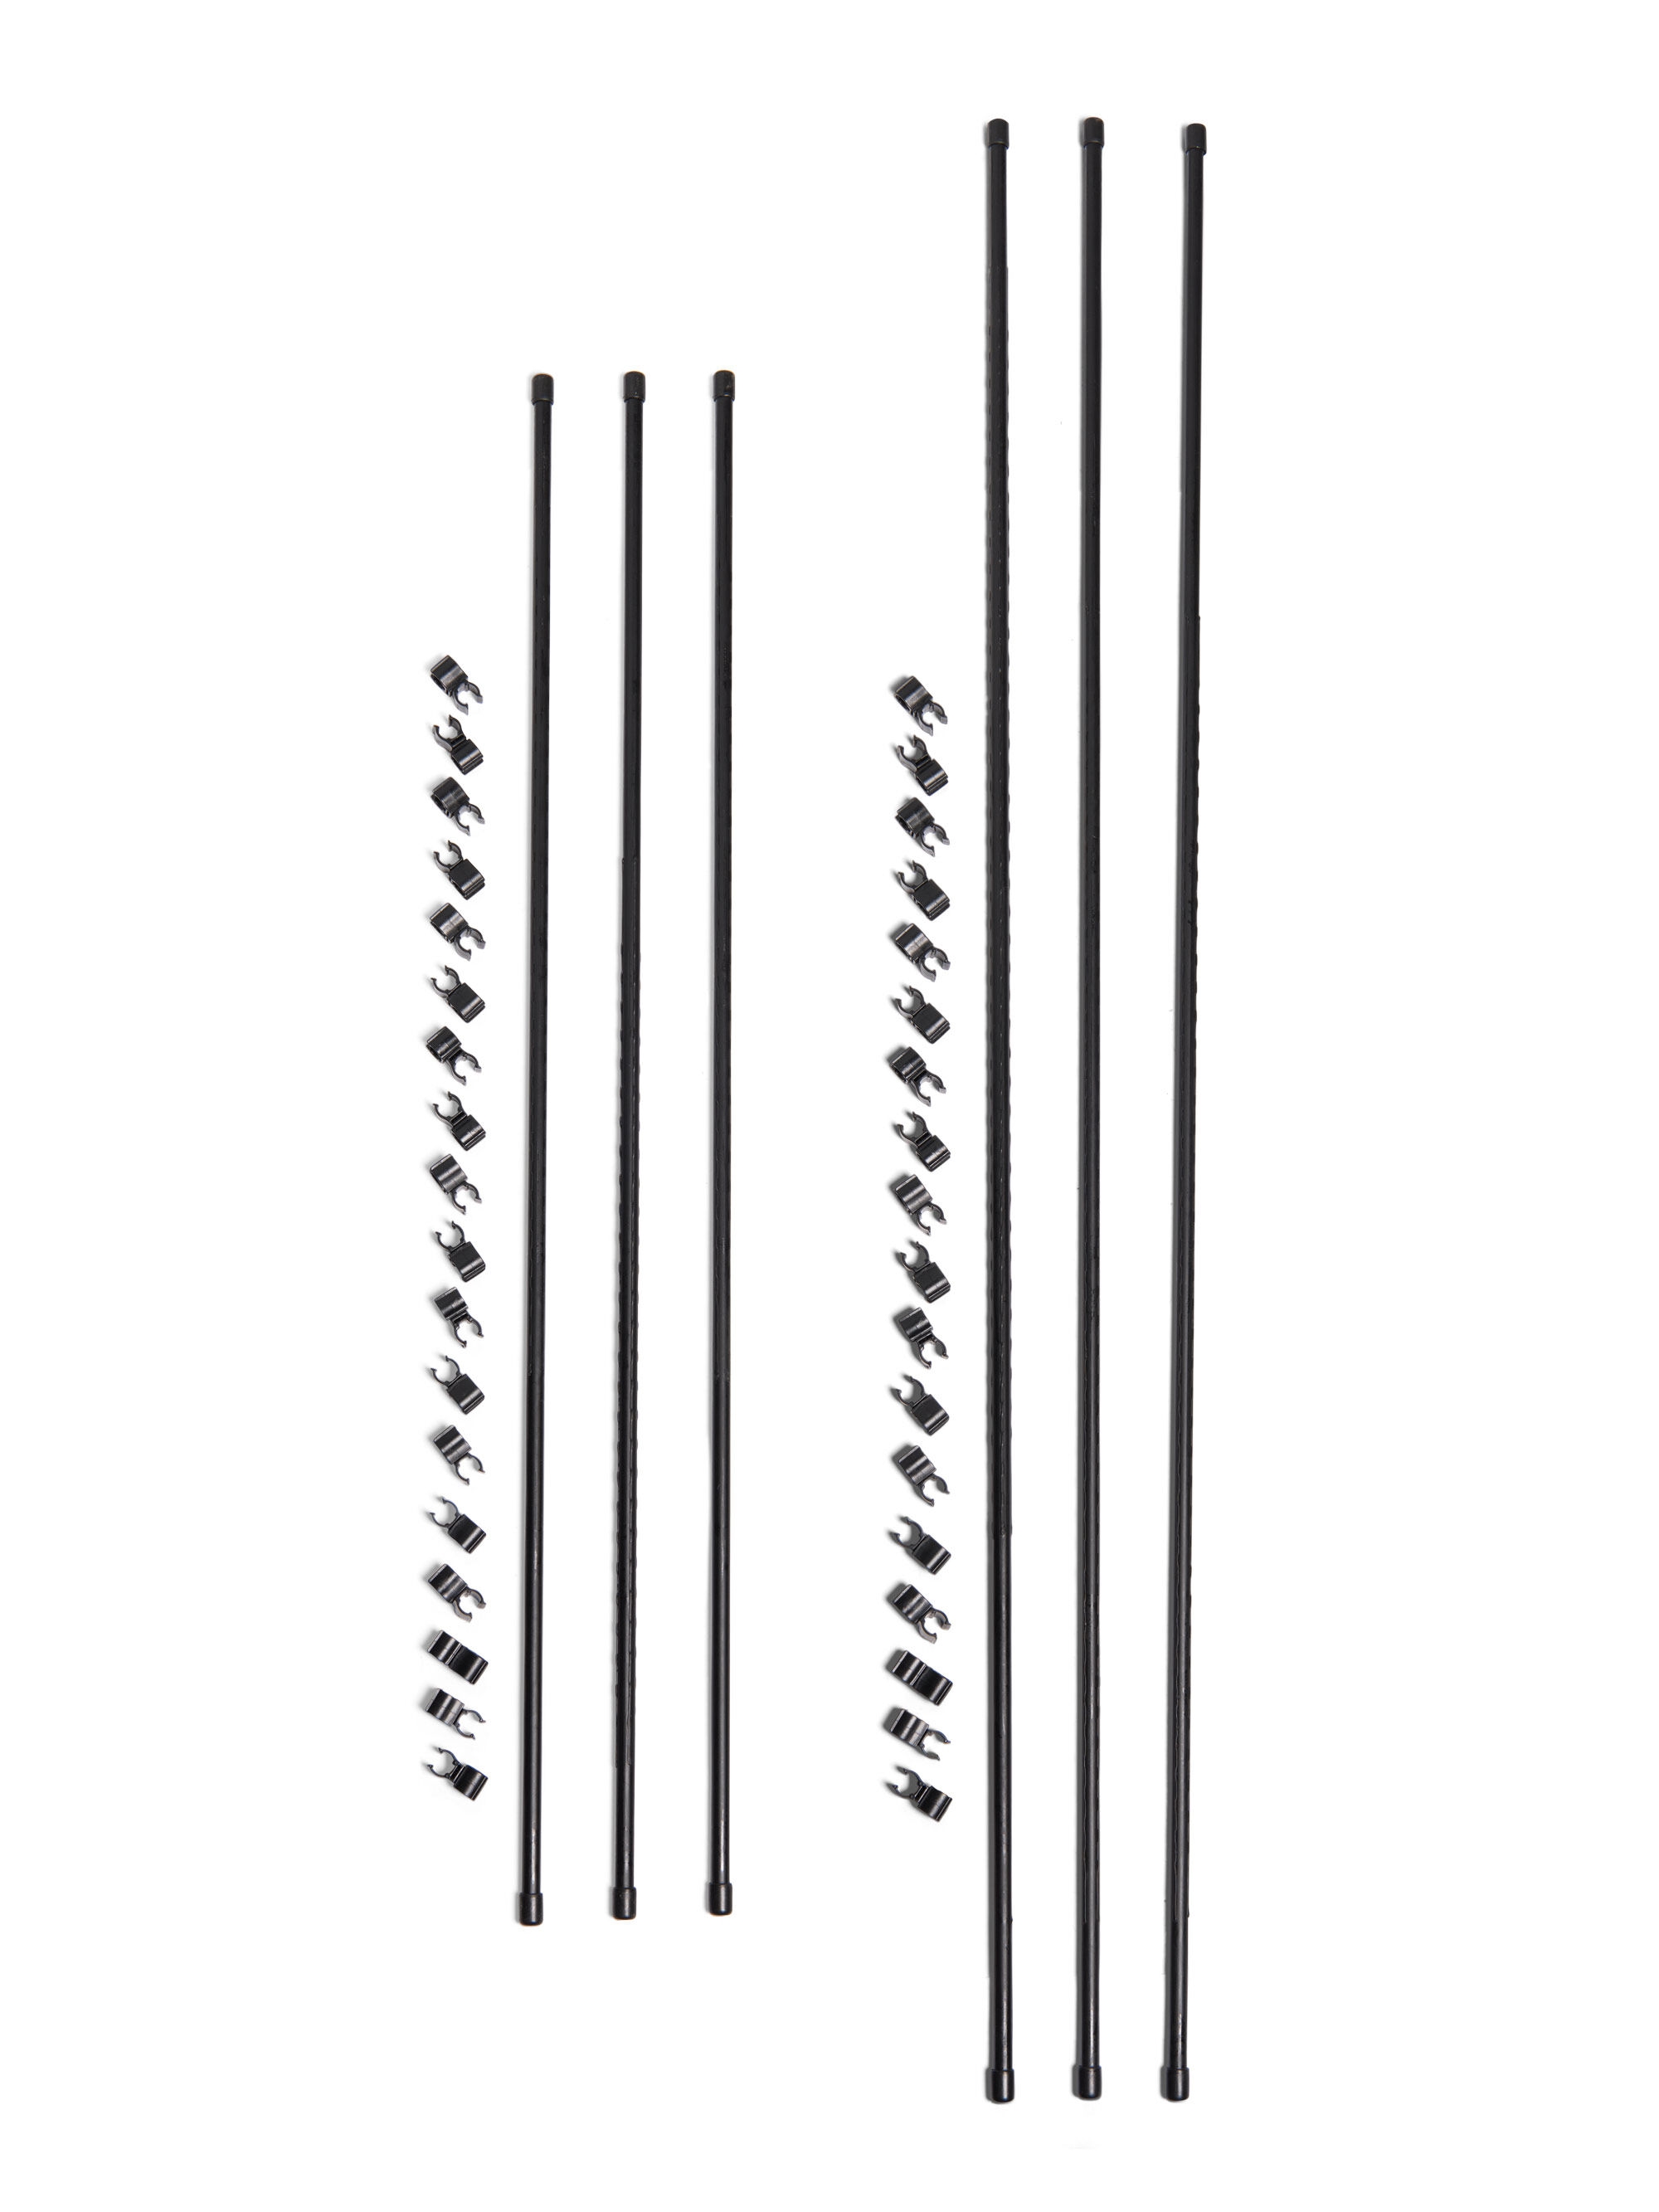 Additional Poles for the Titan Wall Trellis